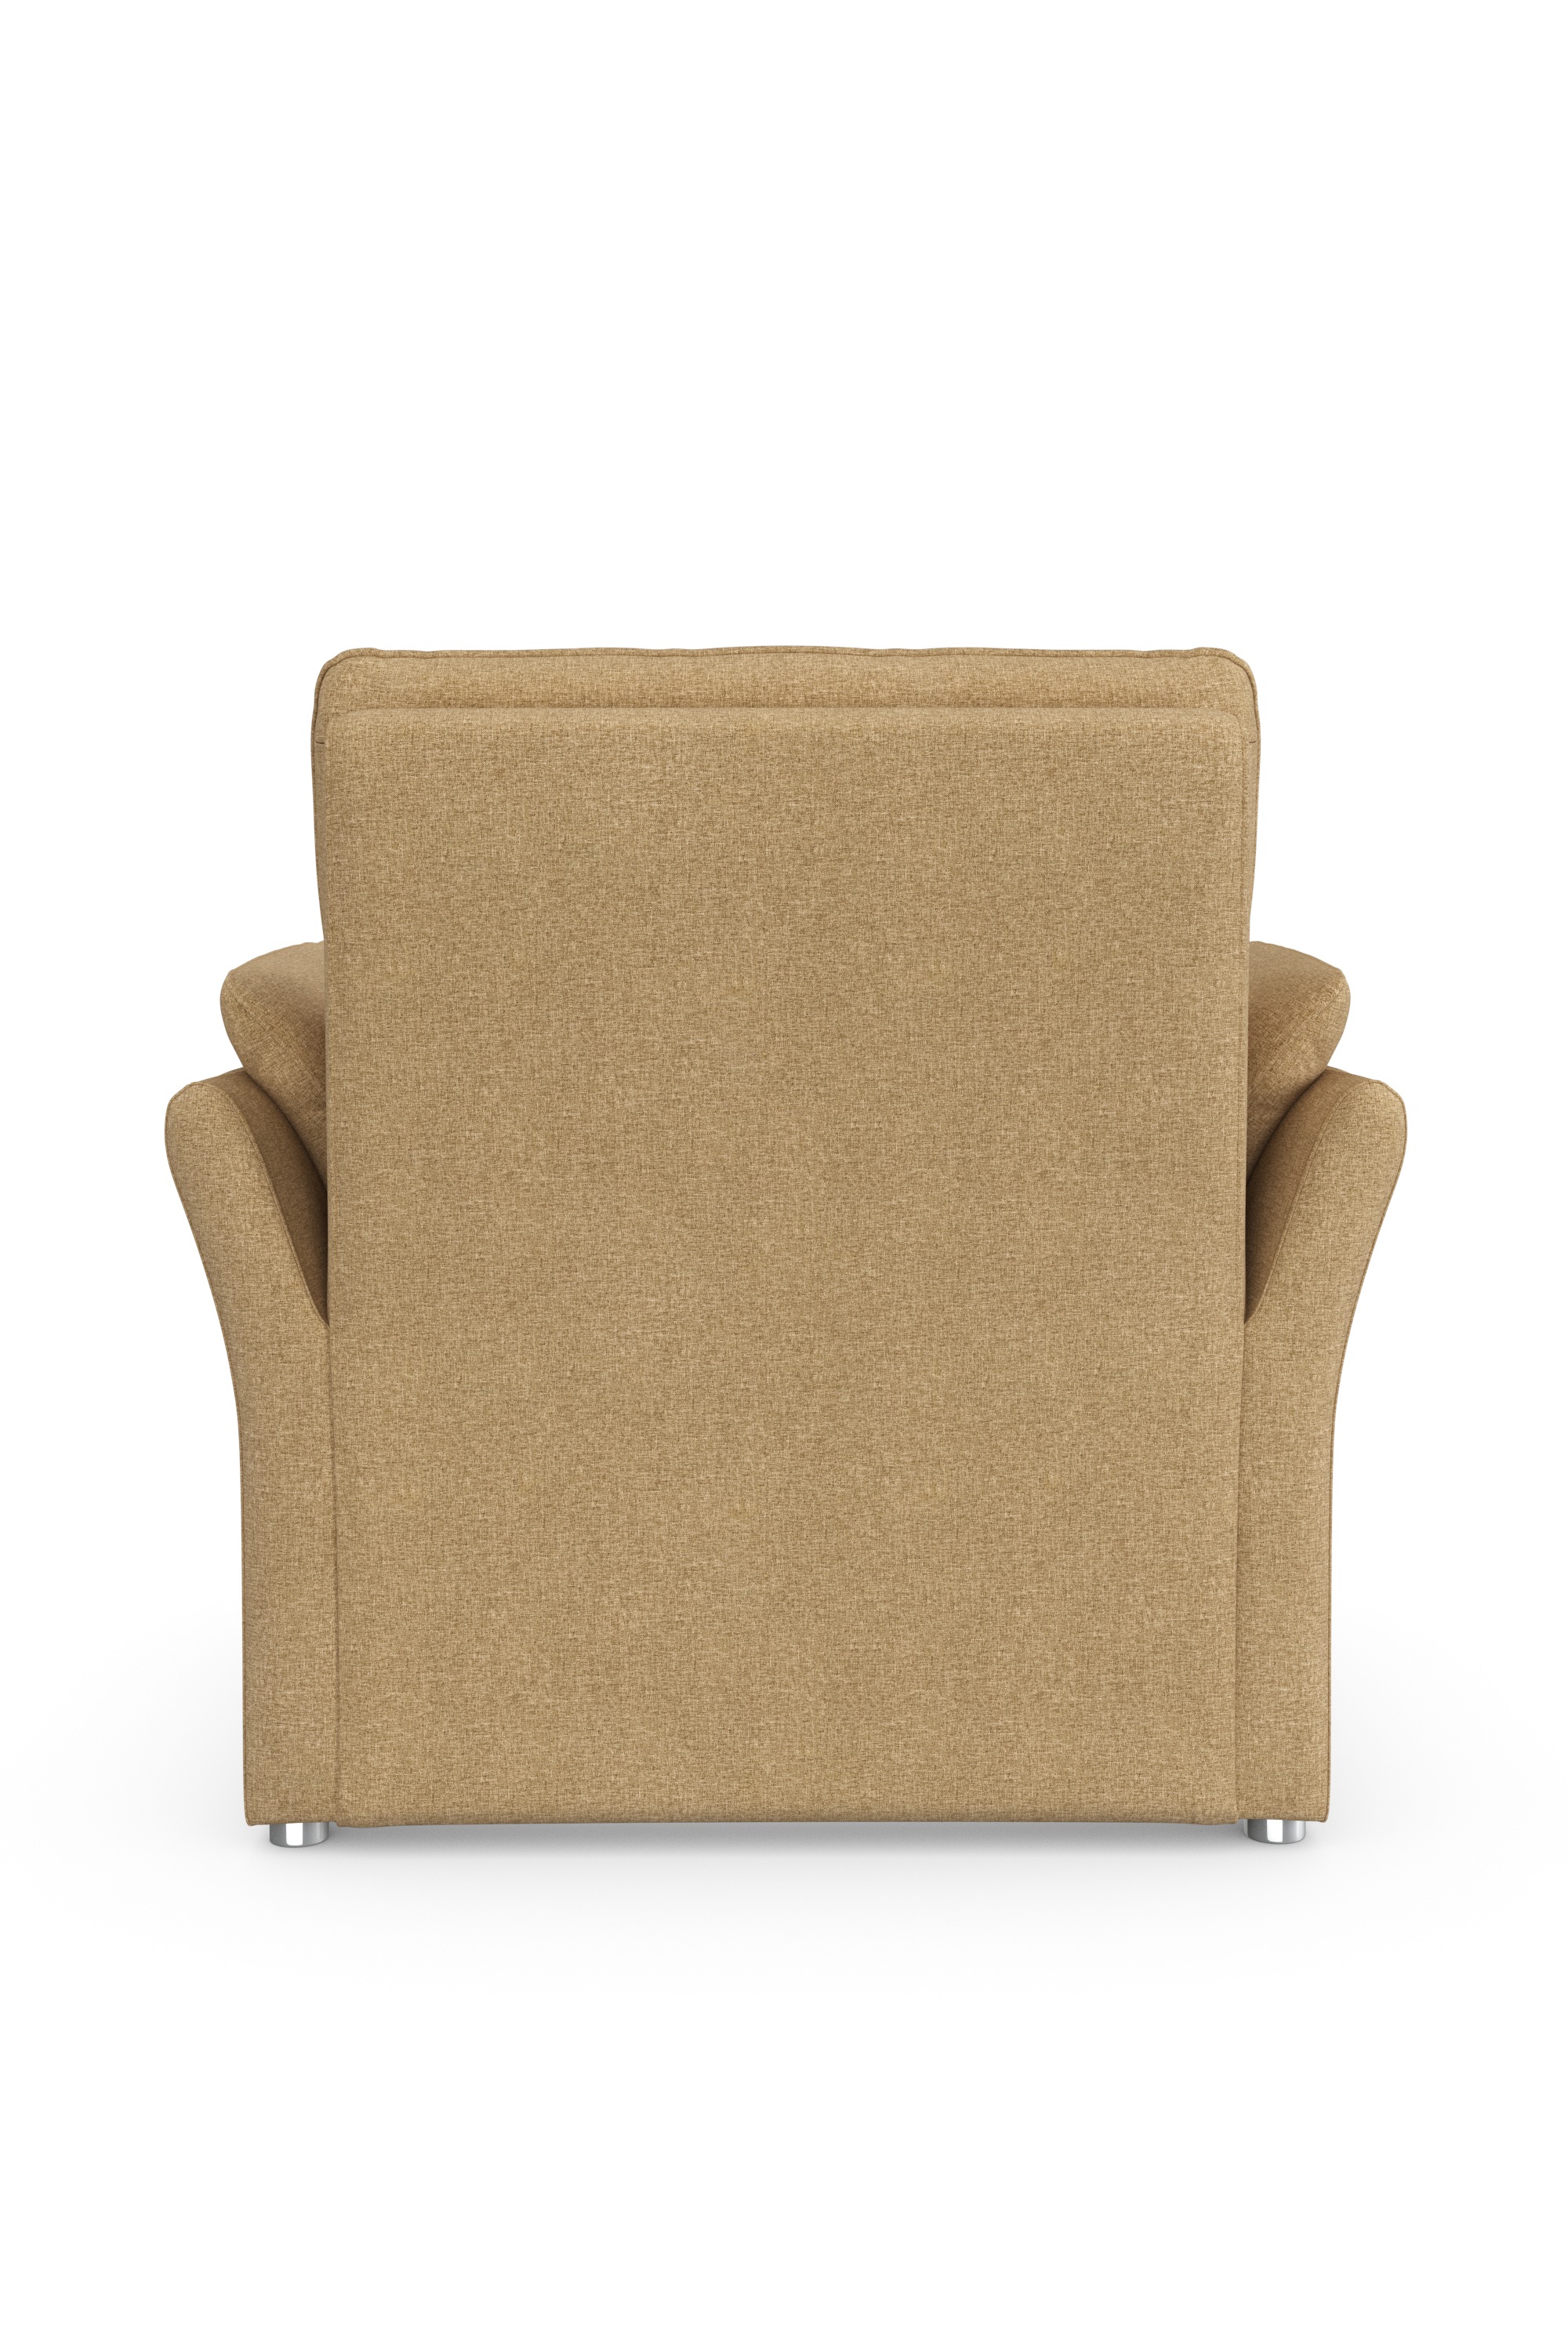 DOMO collection Sessel »Pina«, Passender Sessel zur Serie, mit Federkern  sans frais de livraison sur | Einzelsessel